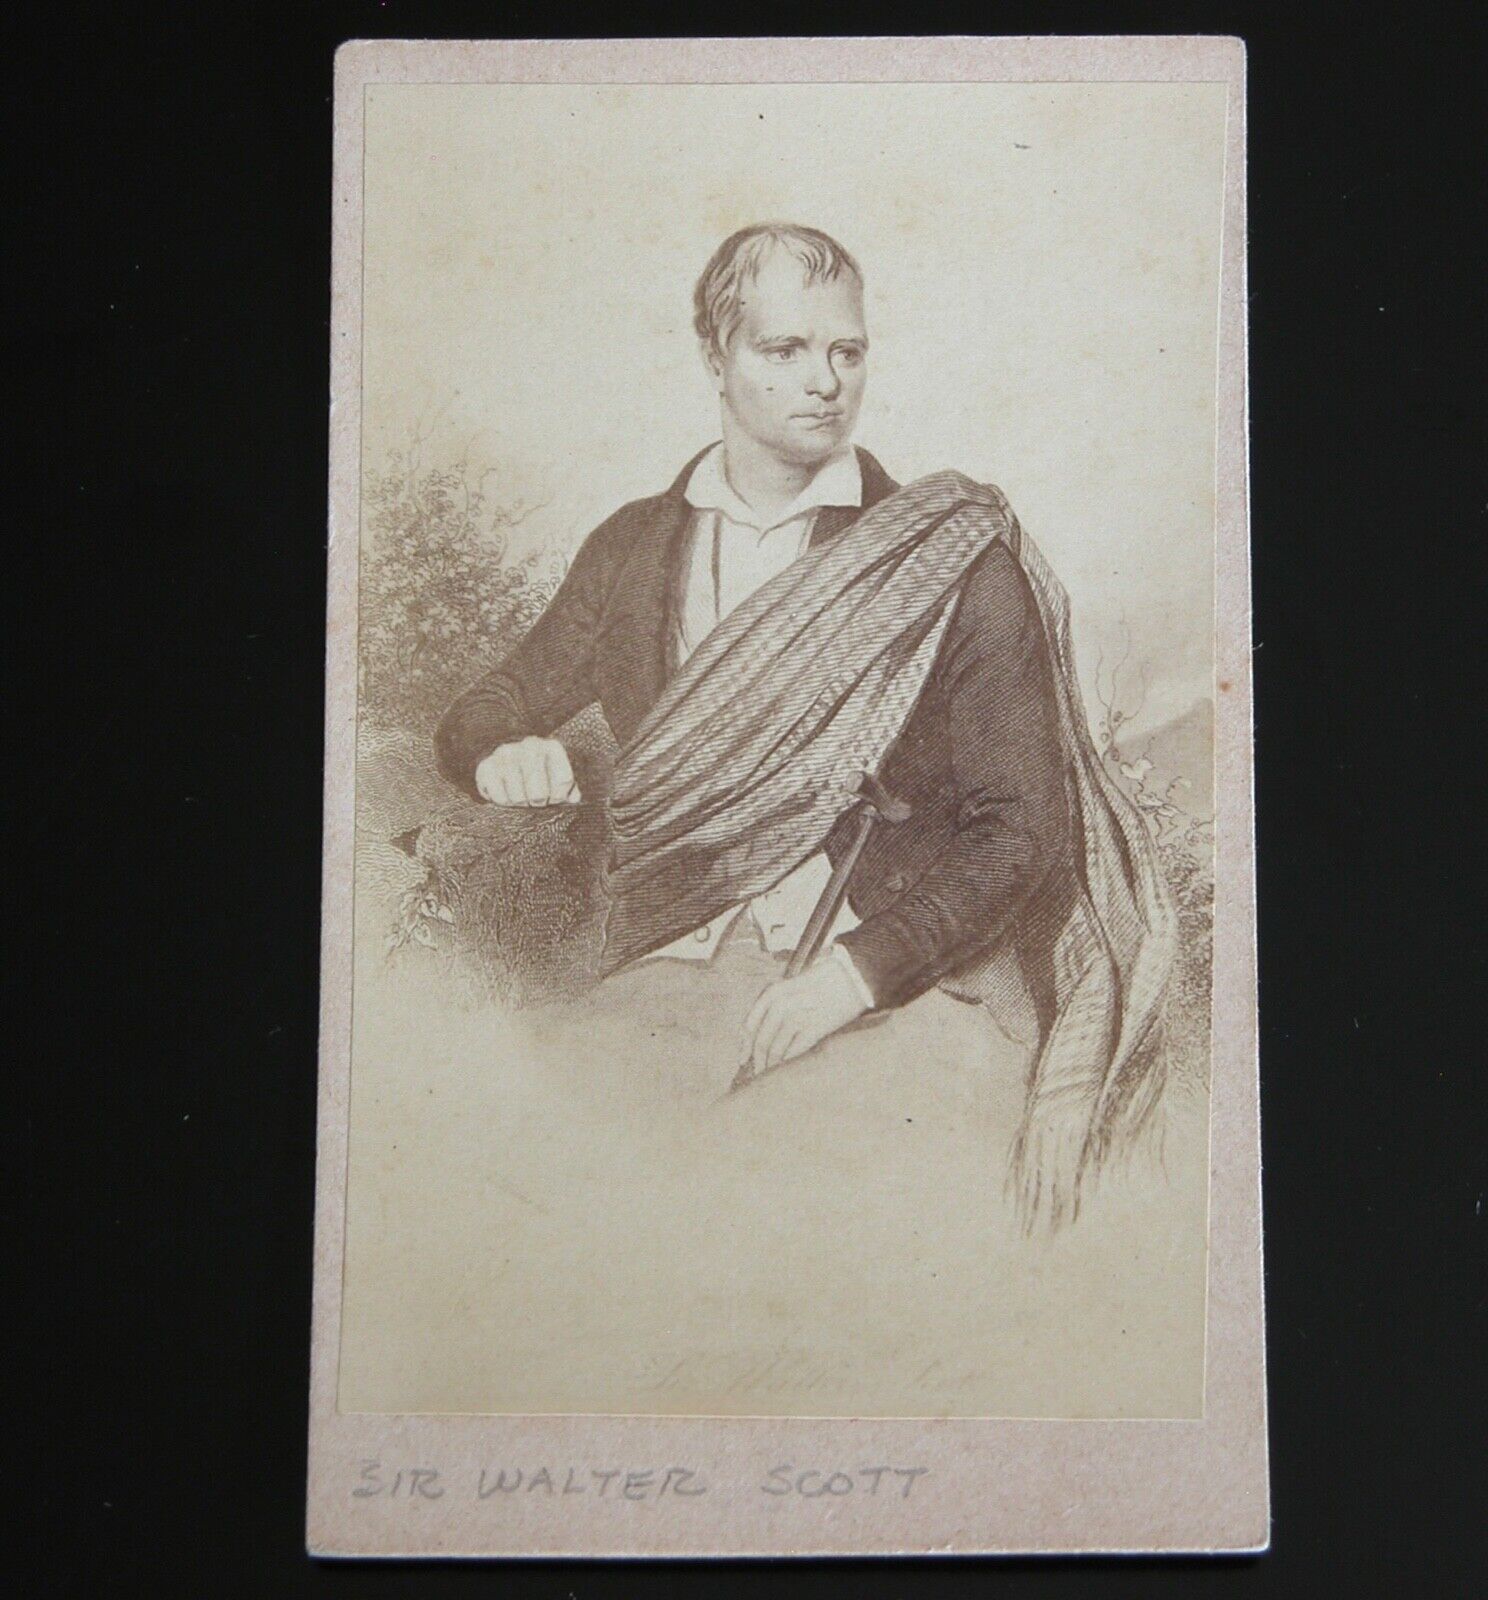 SIR WALTER SCOTT Poet CDV Portrait Albumen Print Scottish Novelist 1860s BOHR 